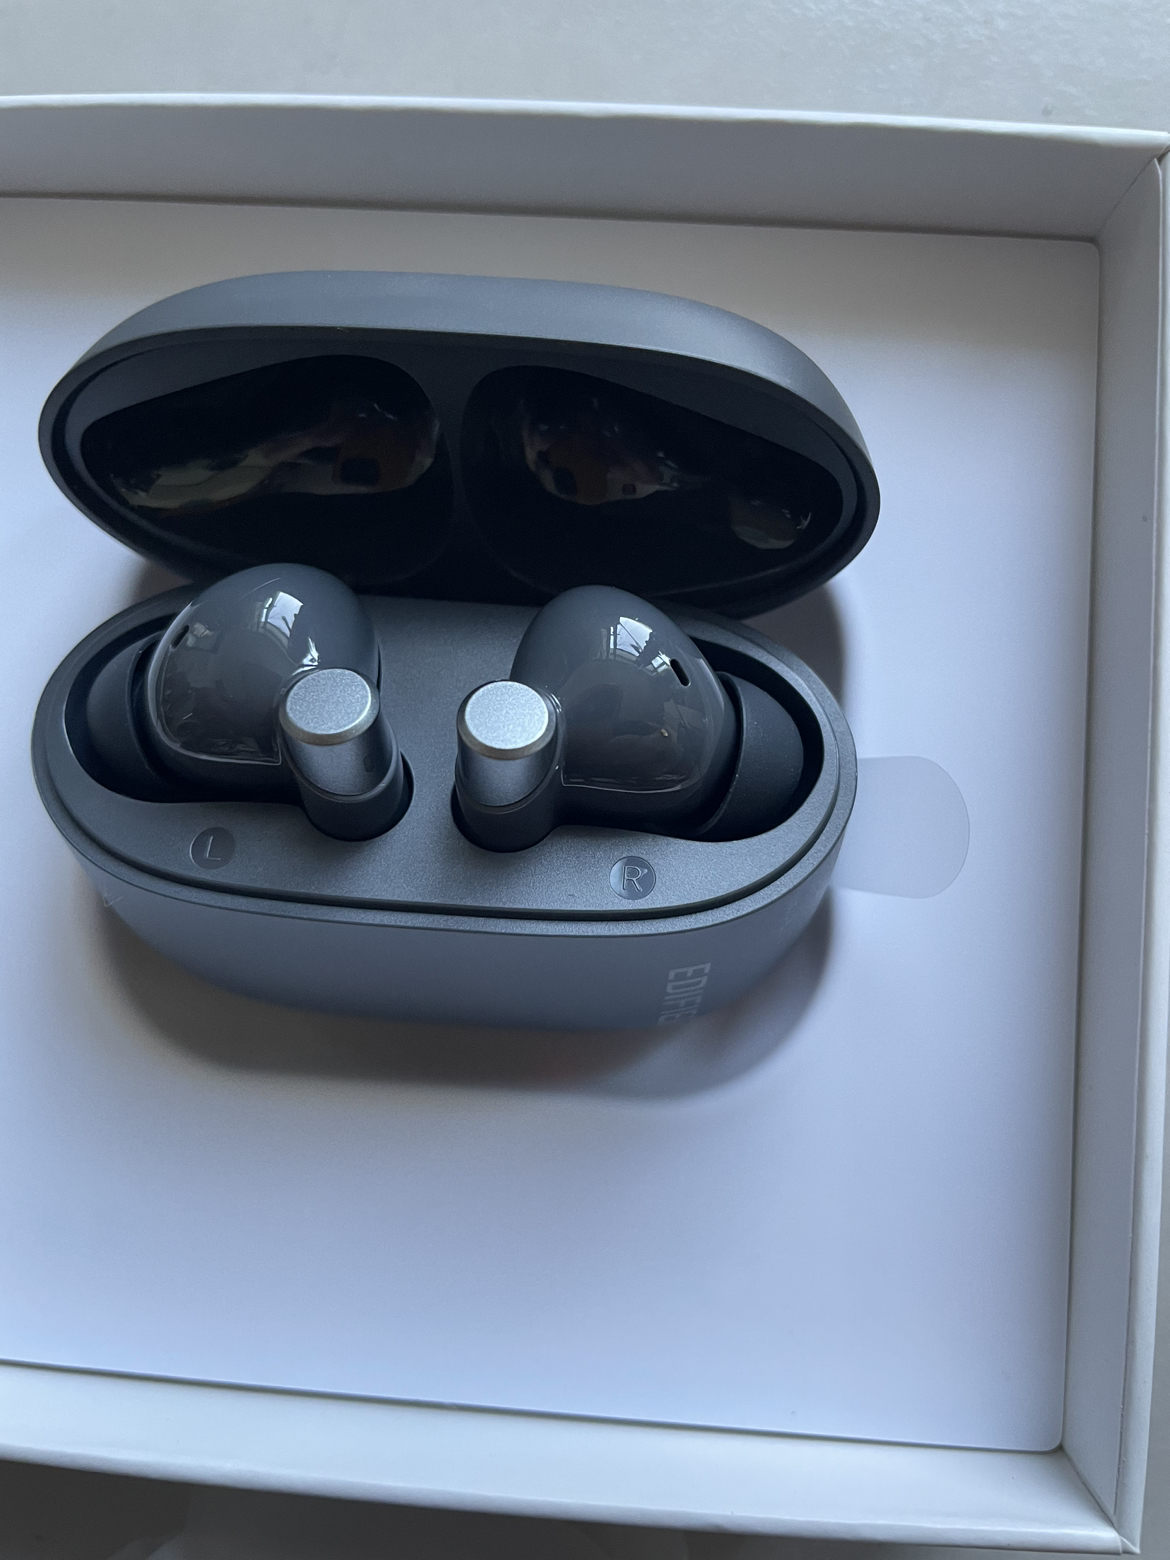 EDIFIER/漫步者Zero Pro真无线蓝牙耳机主动降噪游戏运动超长续航适用华为苹果花再2023新款 暮灰色晒单图